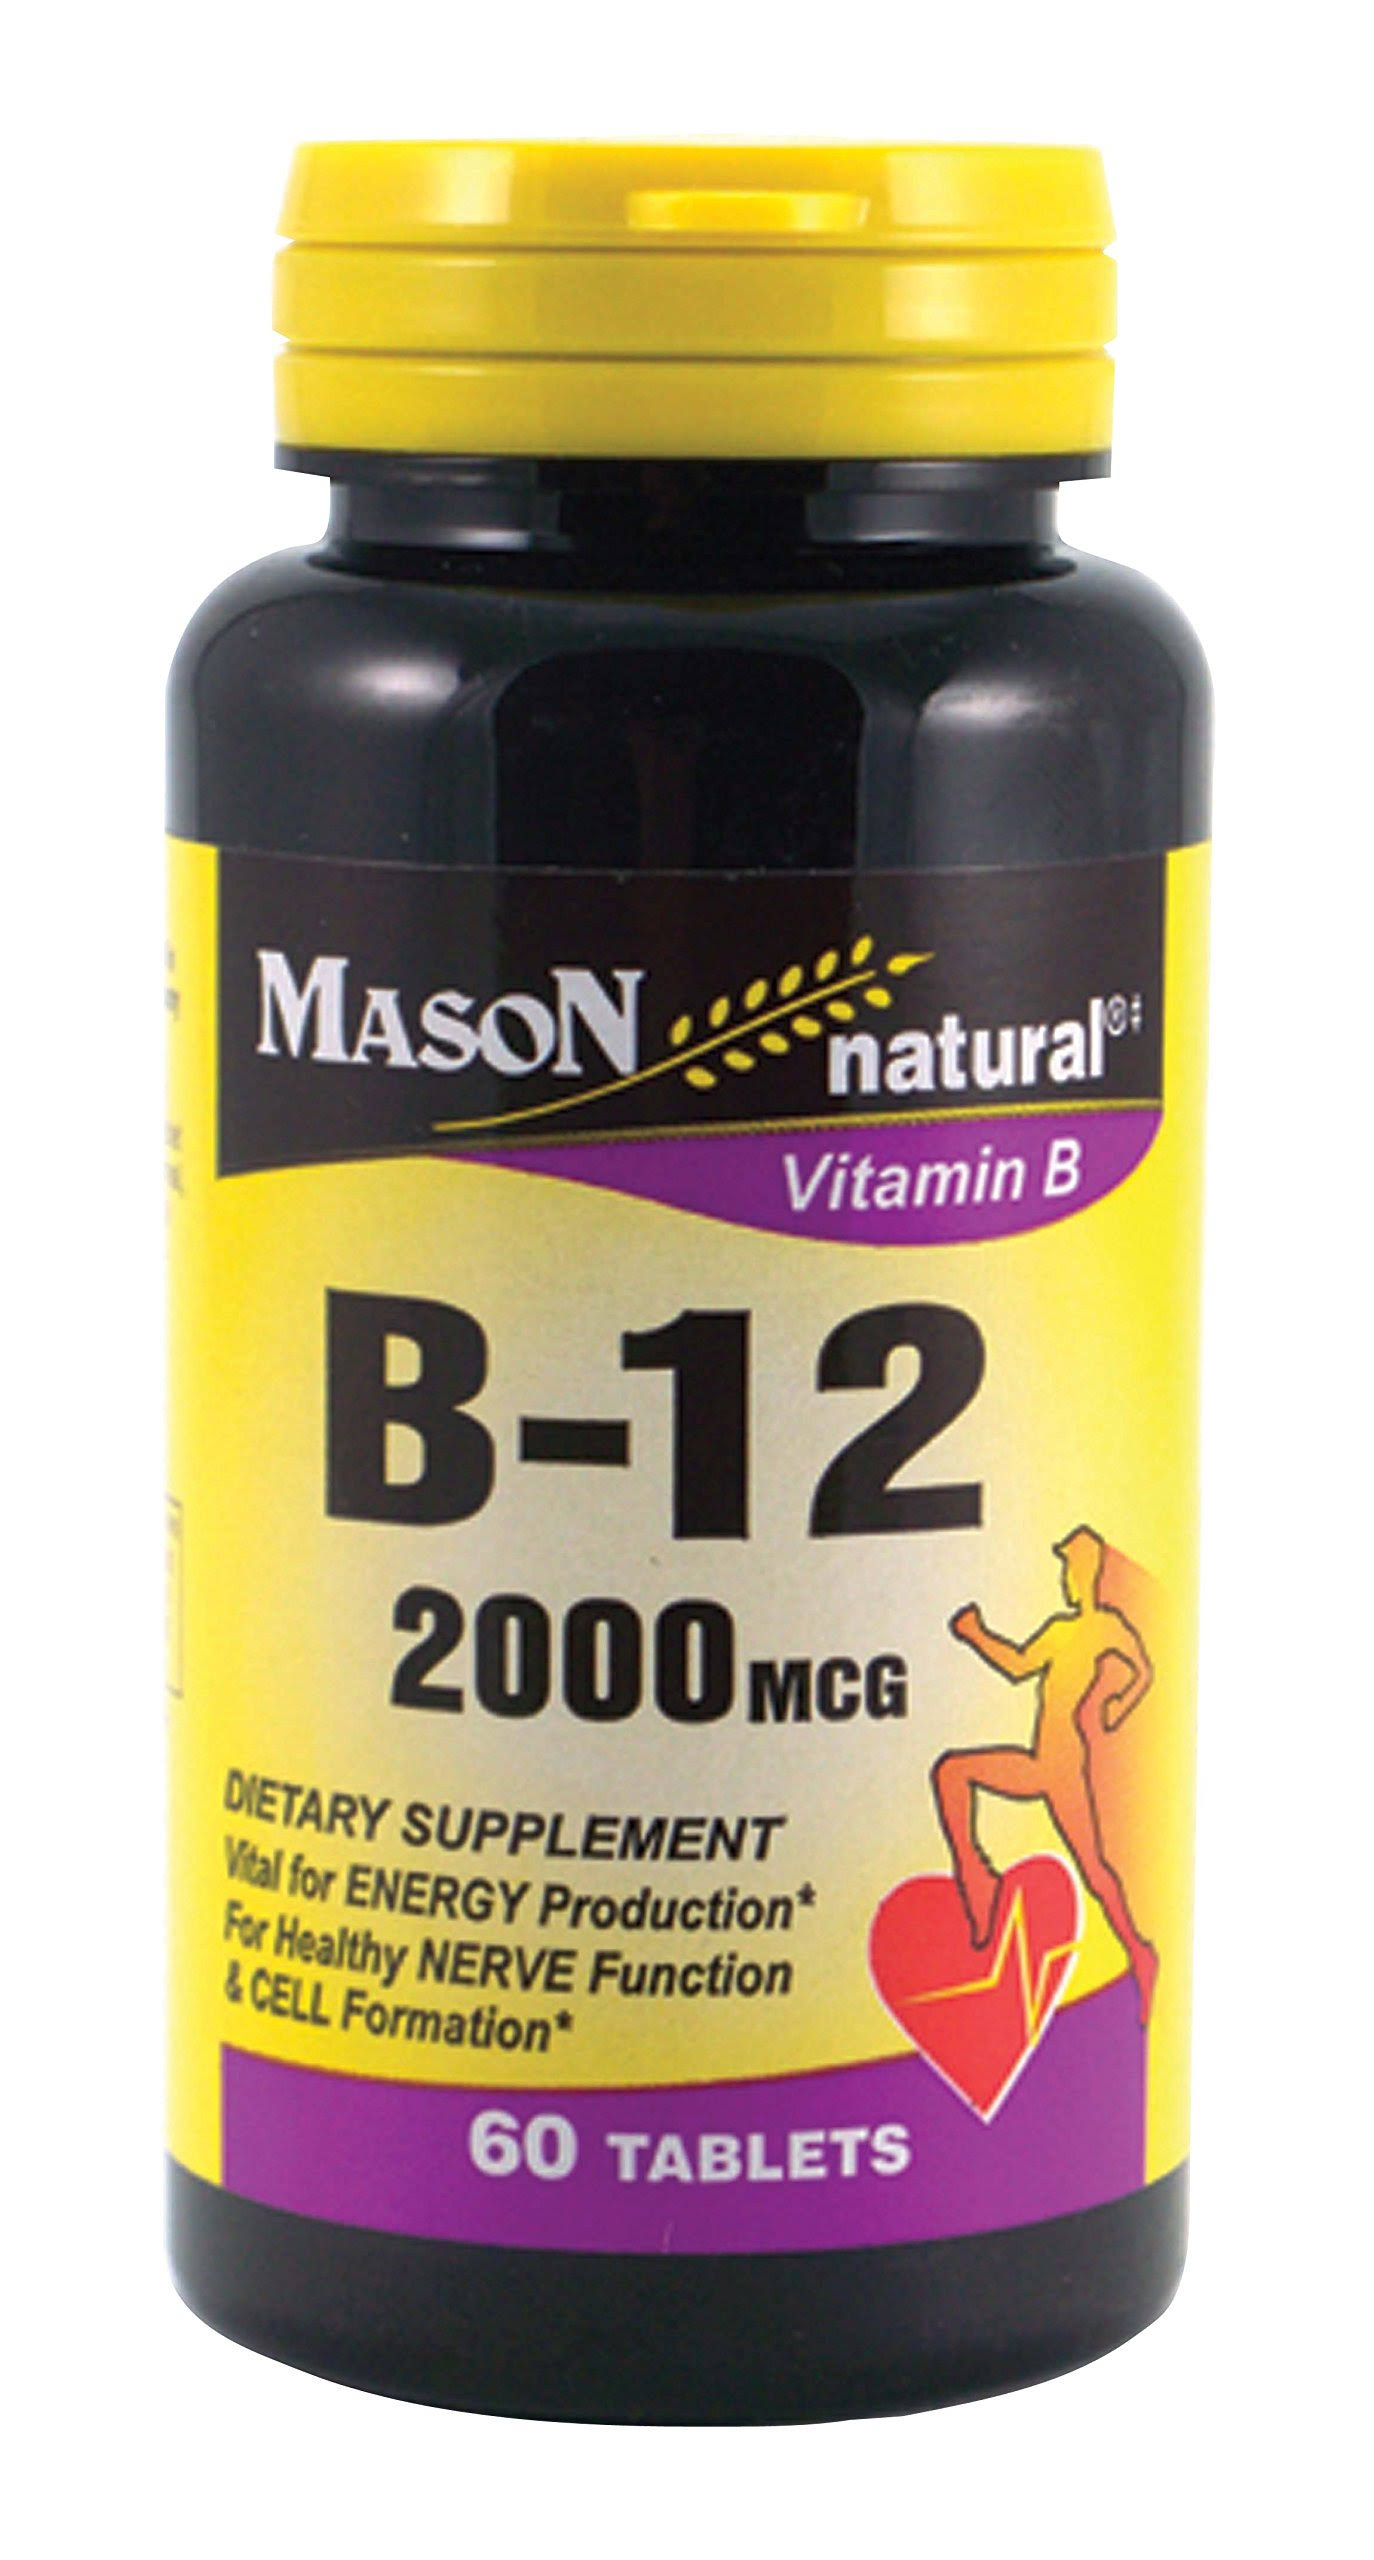 Mason Naturals Vitamin B-12 Dietary Supplement - 2000Mcg, 60ct